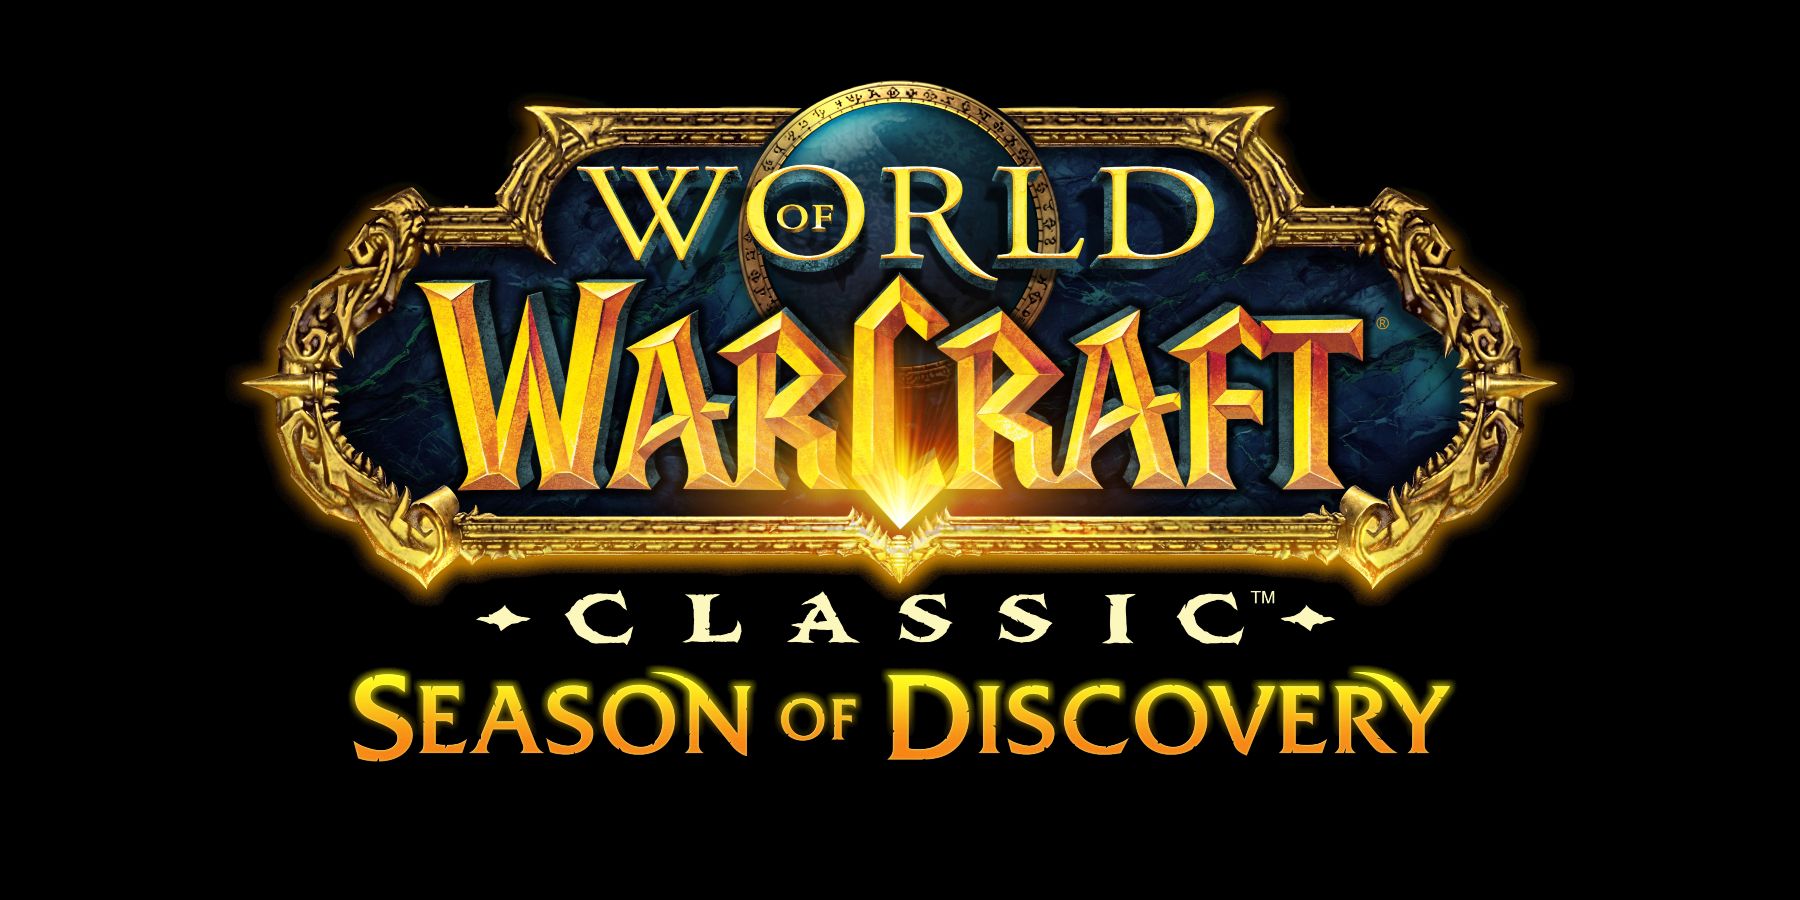 world of warcraft classic season of discovery logo